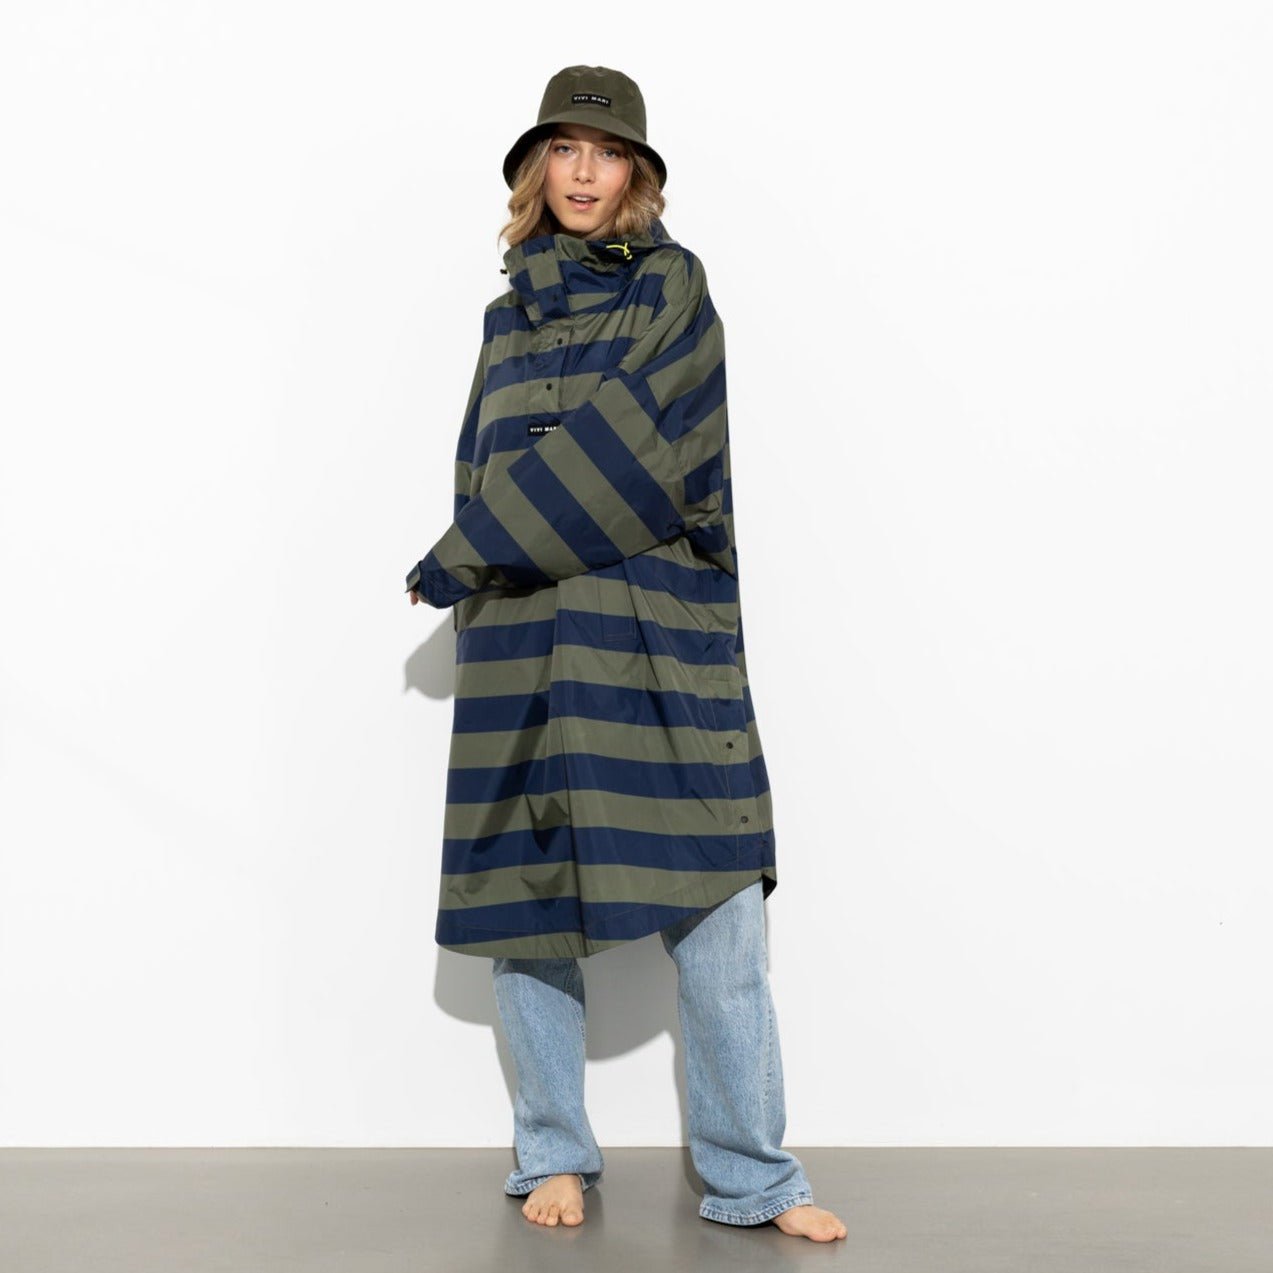 Raincoat bold stripes - navy/olive - VIVI MARI